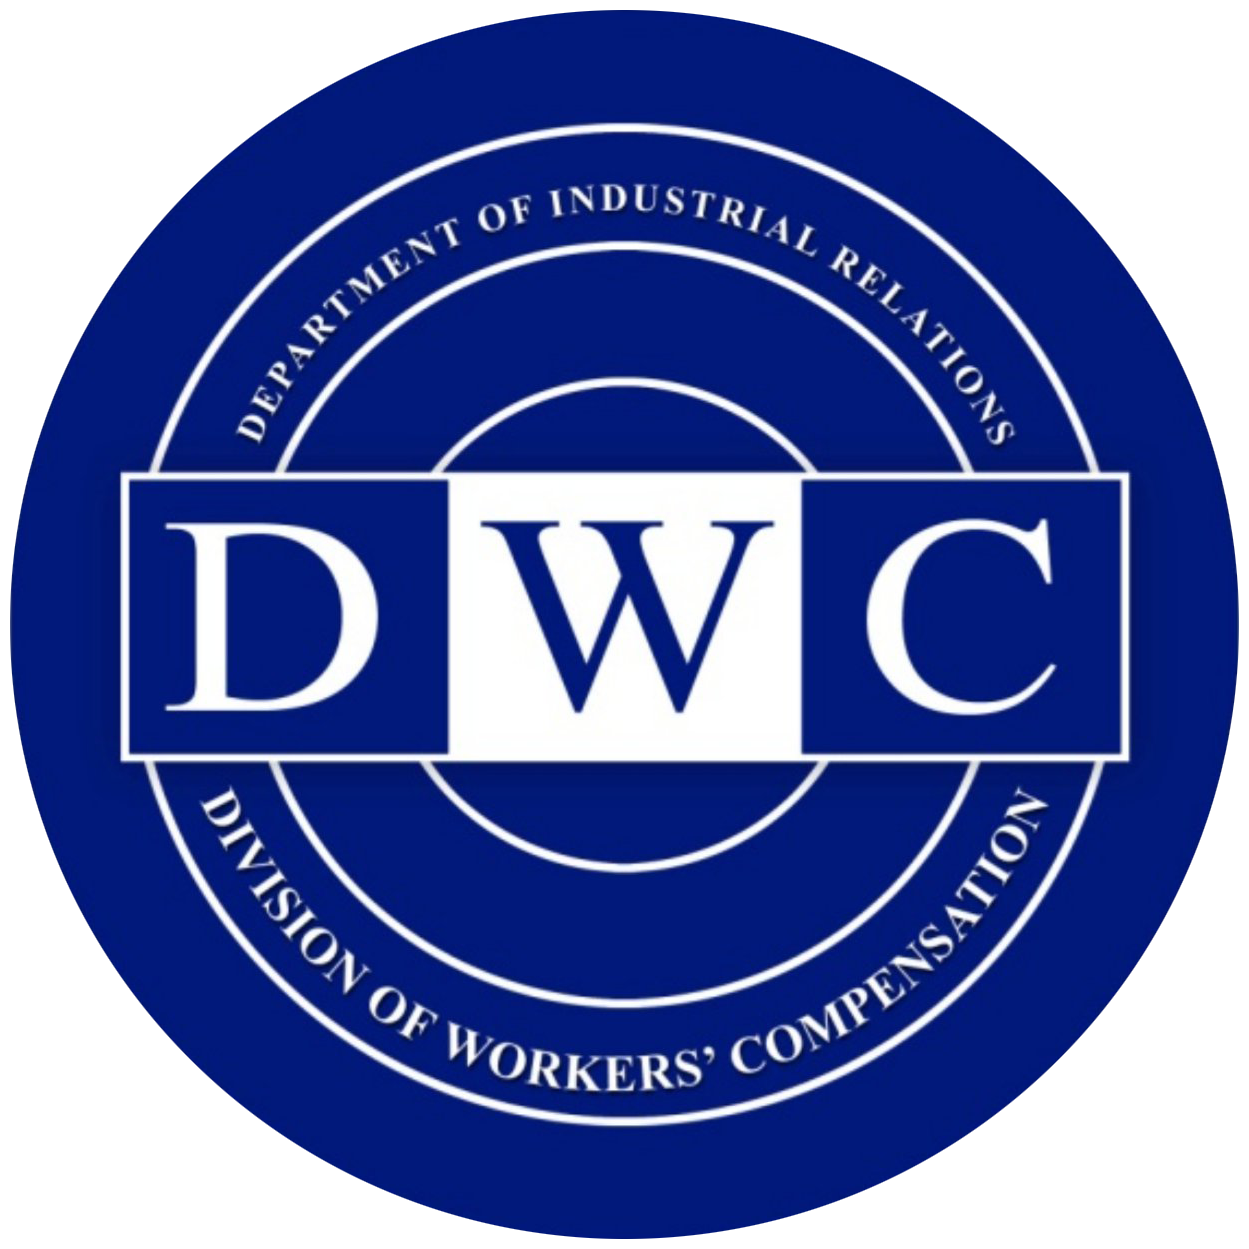 QME Report Filing Deadlines Under DWC Scrutiny